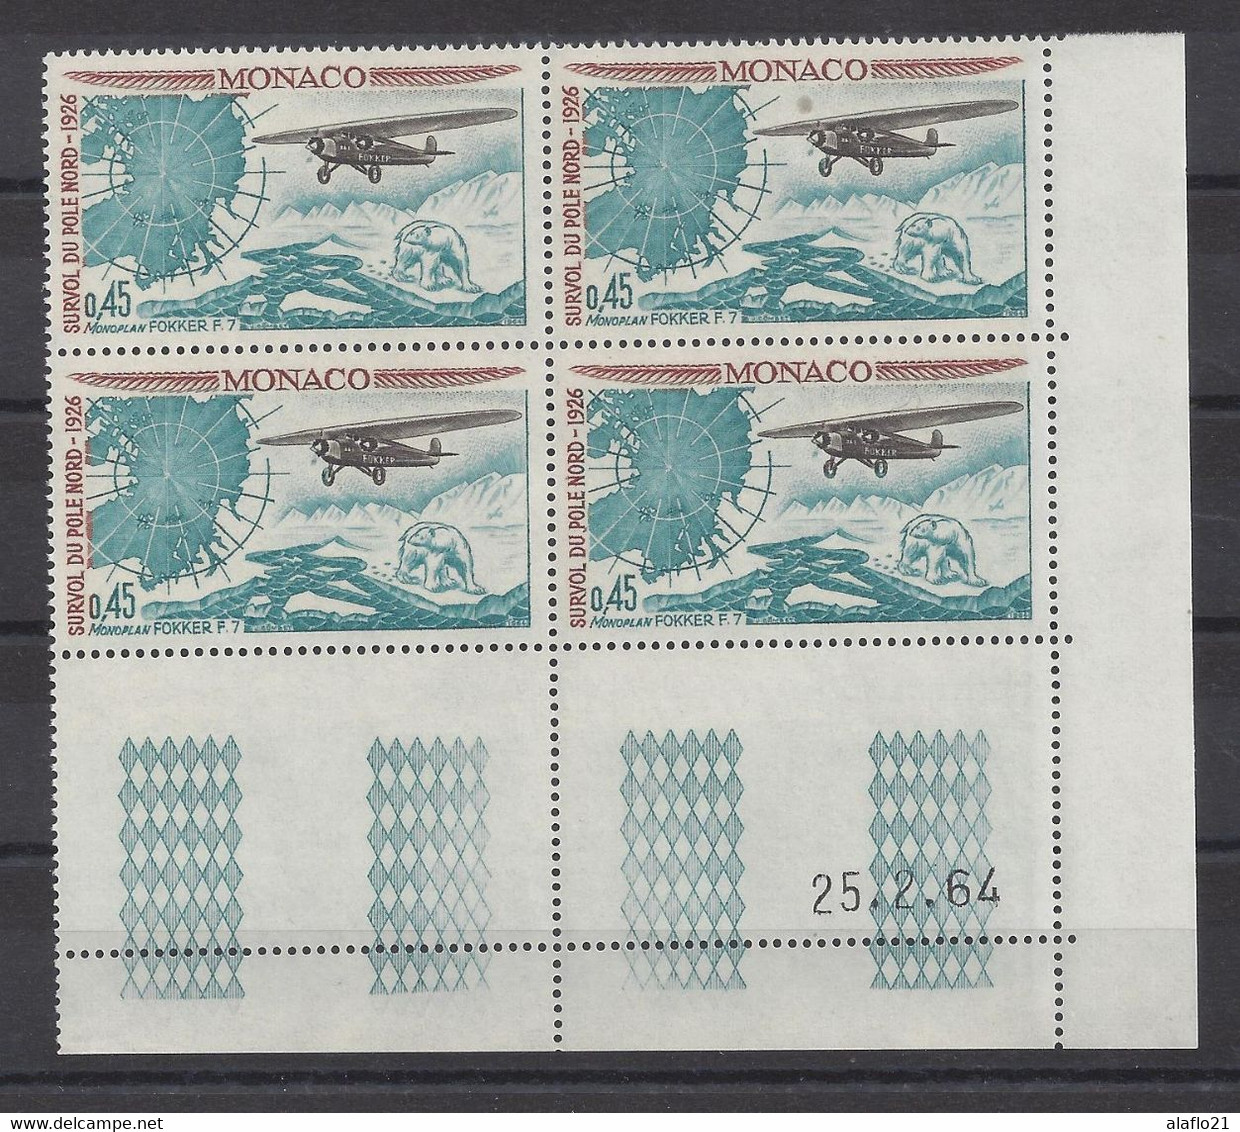 MONACO N° 647 - RALLYE AERIEN - Bloc De 4 COIN DATE - NEUF ** - 25/2/64 - Unused Stamps